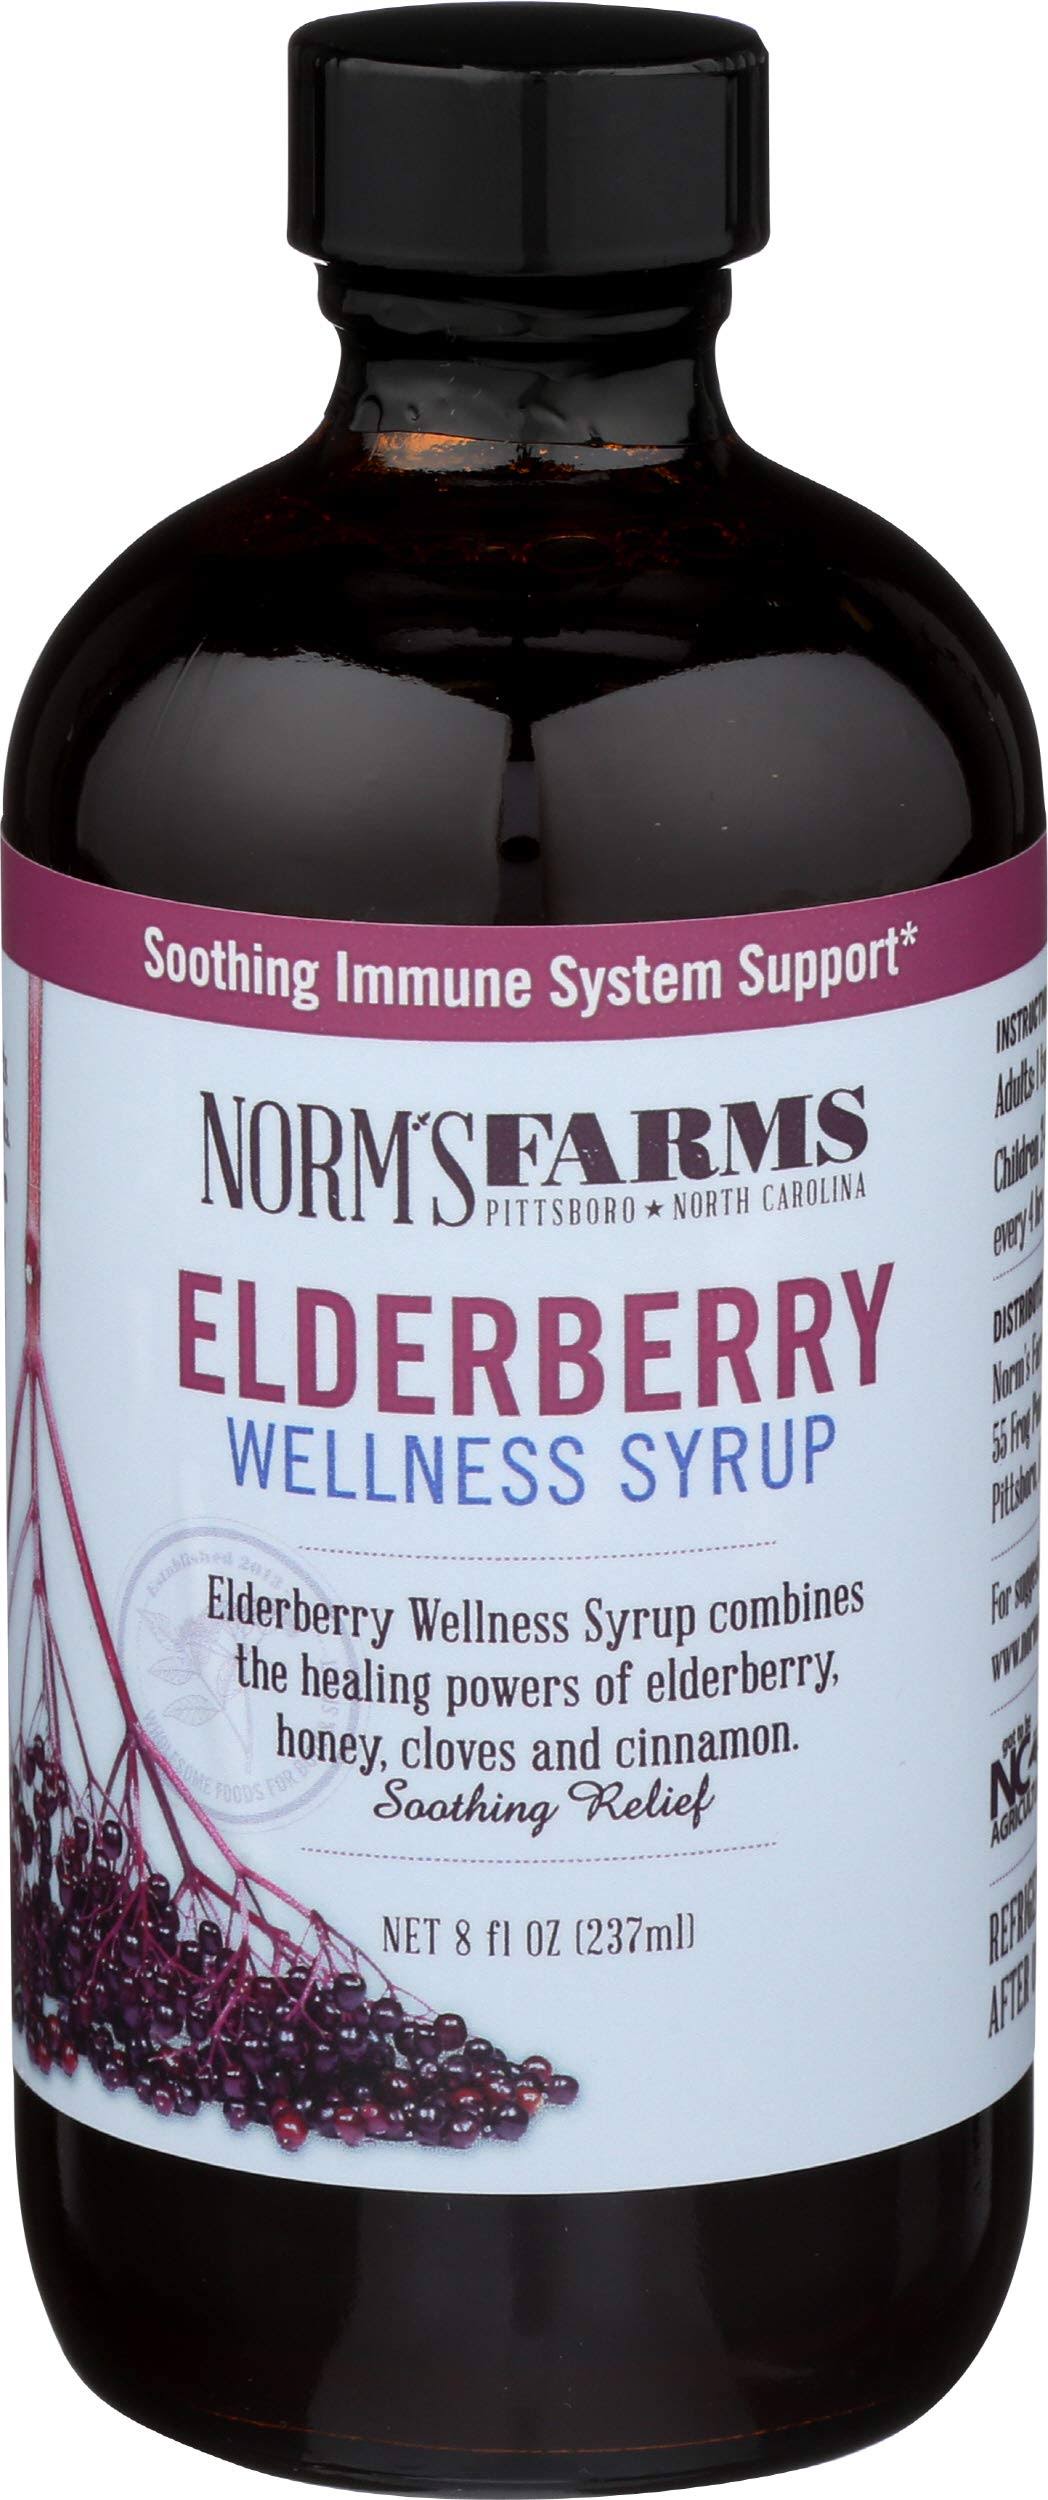 Norms Farms Wellness Syrup Elderberry 8 fl oz (237 ml)